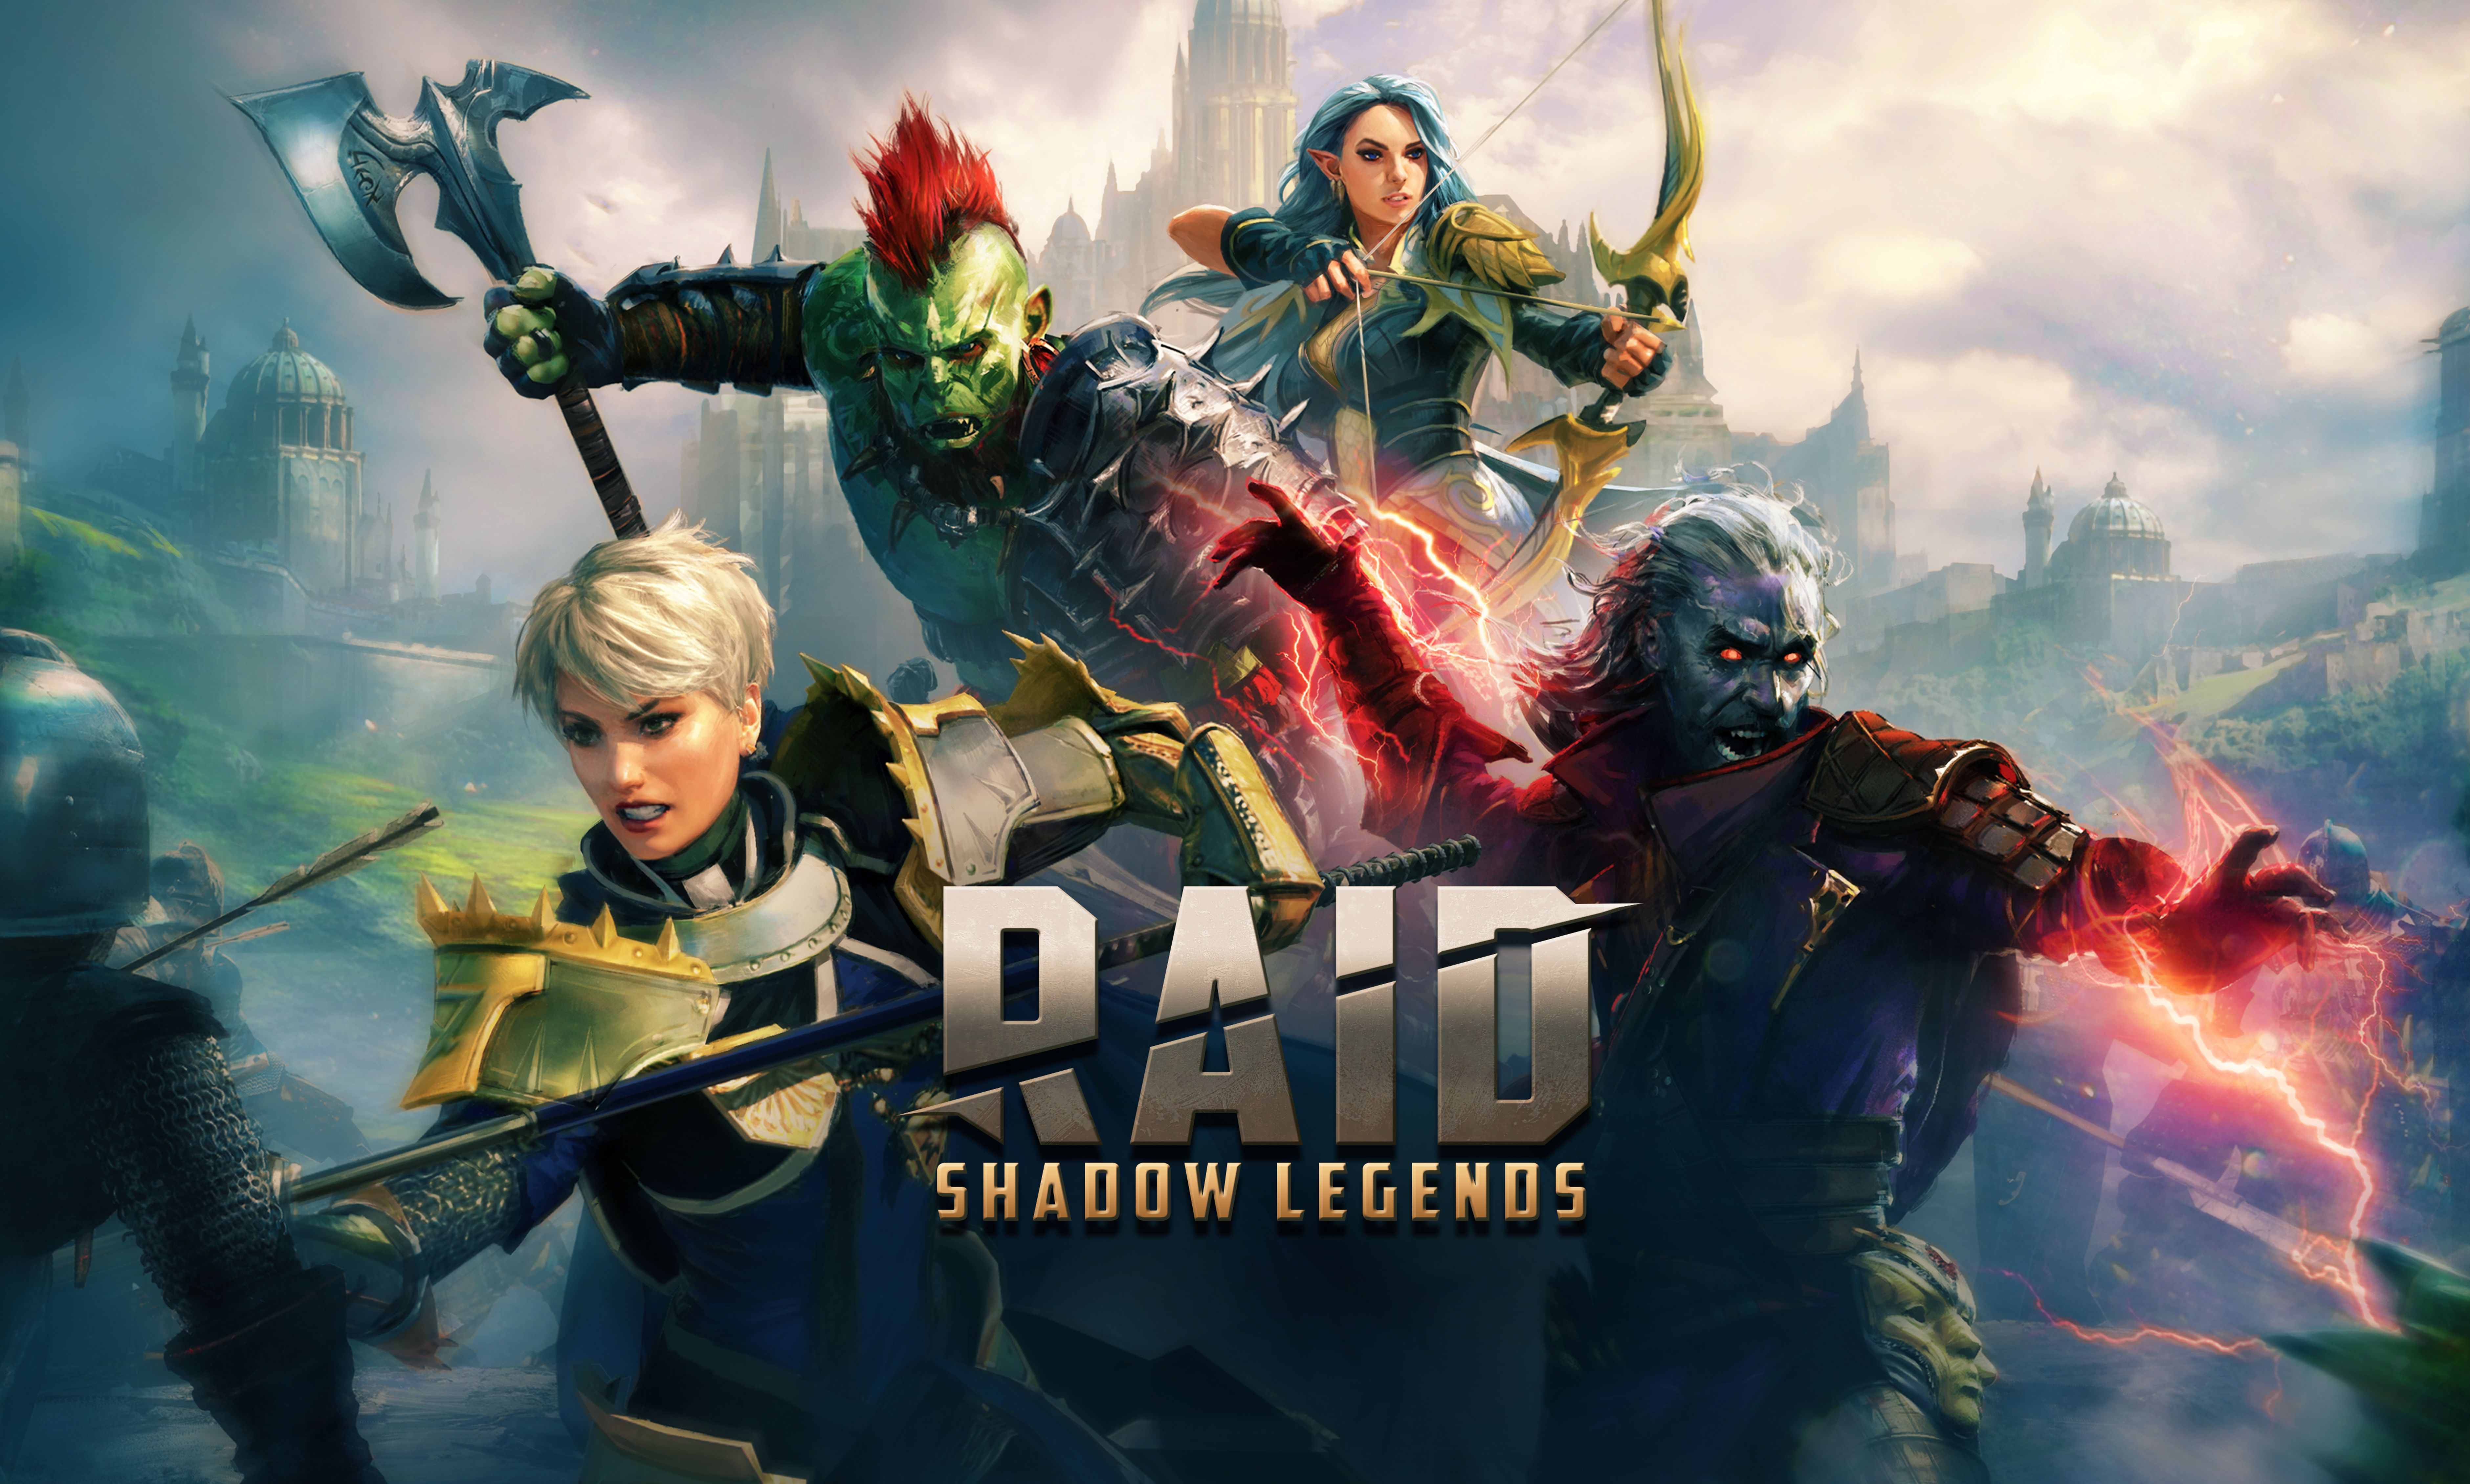 twitter raid shadow legends